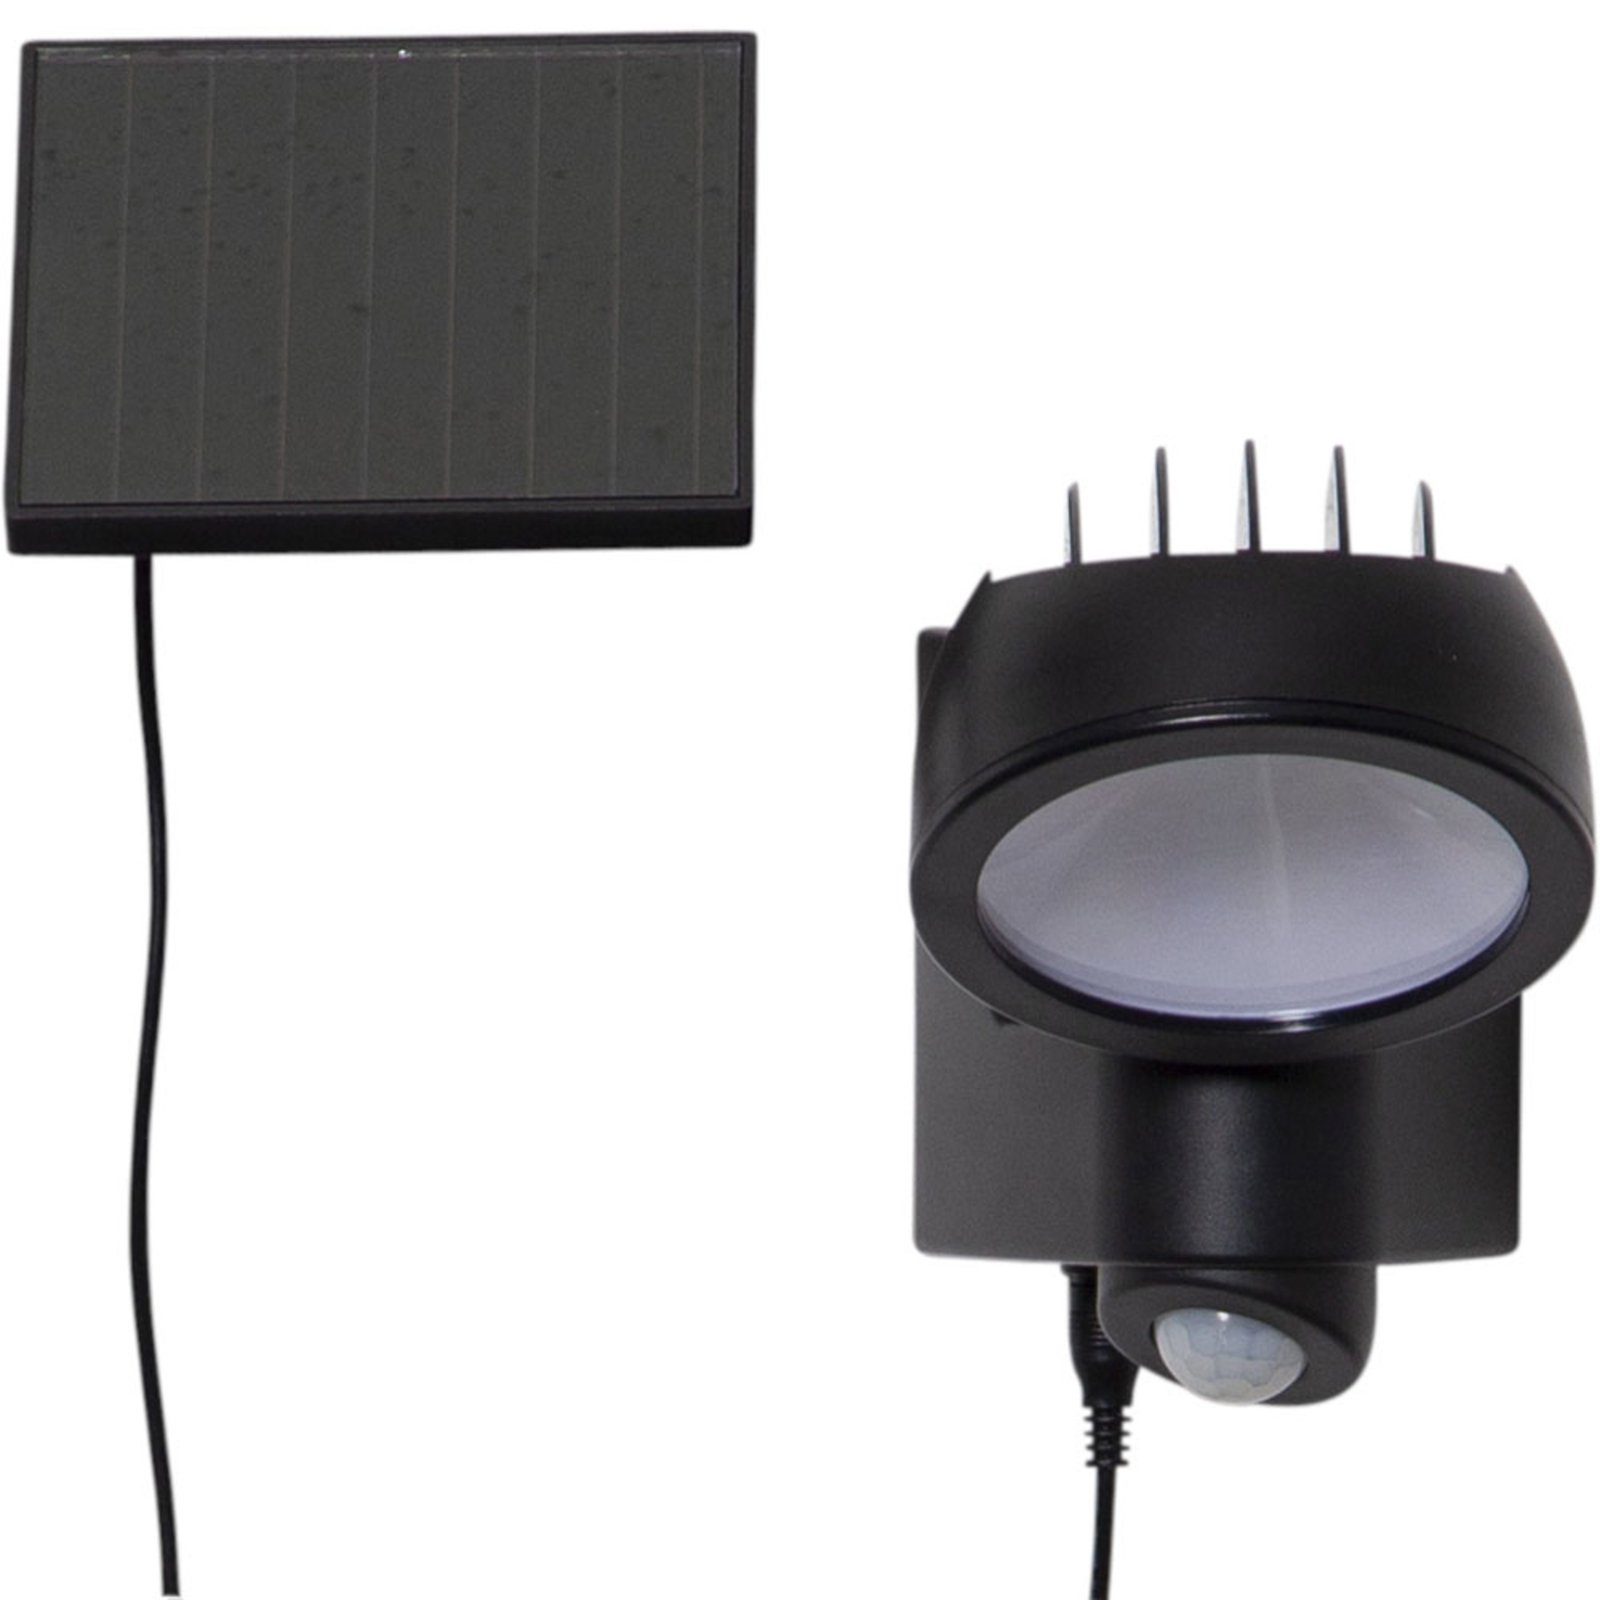 LED-solcellelampe Powerspot Senosr, rund, 150 lm